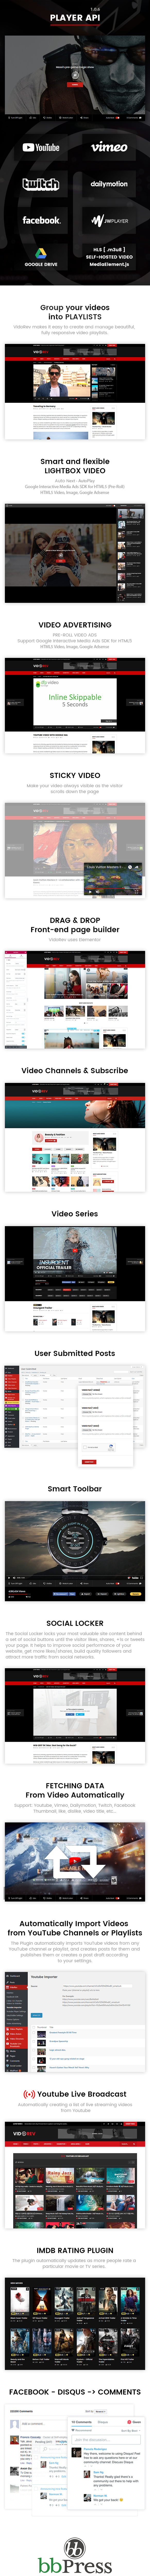 VidoRev - Video WordPress Theme - 15